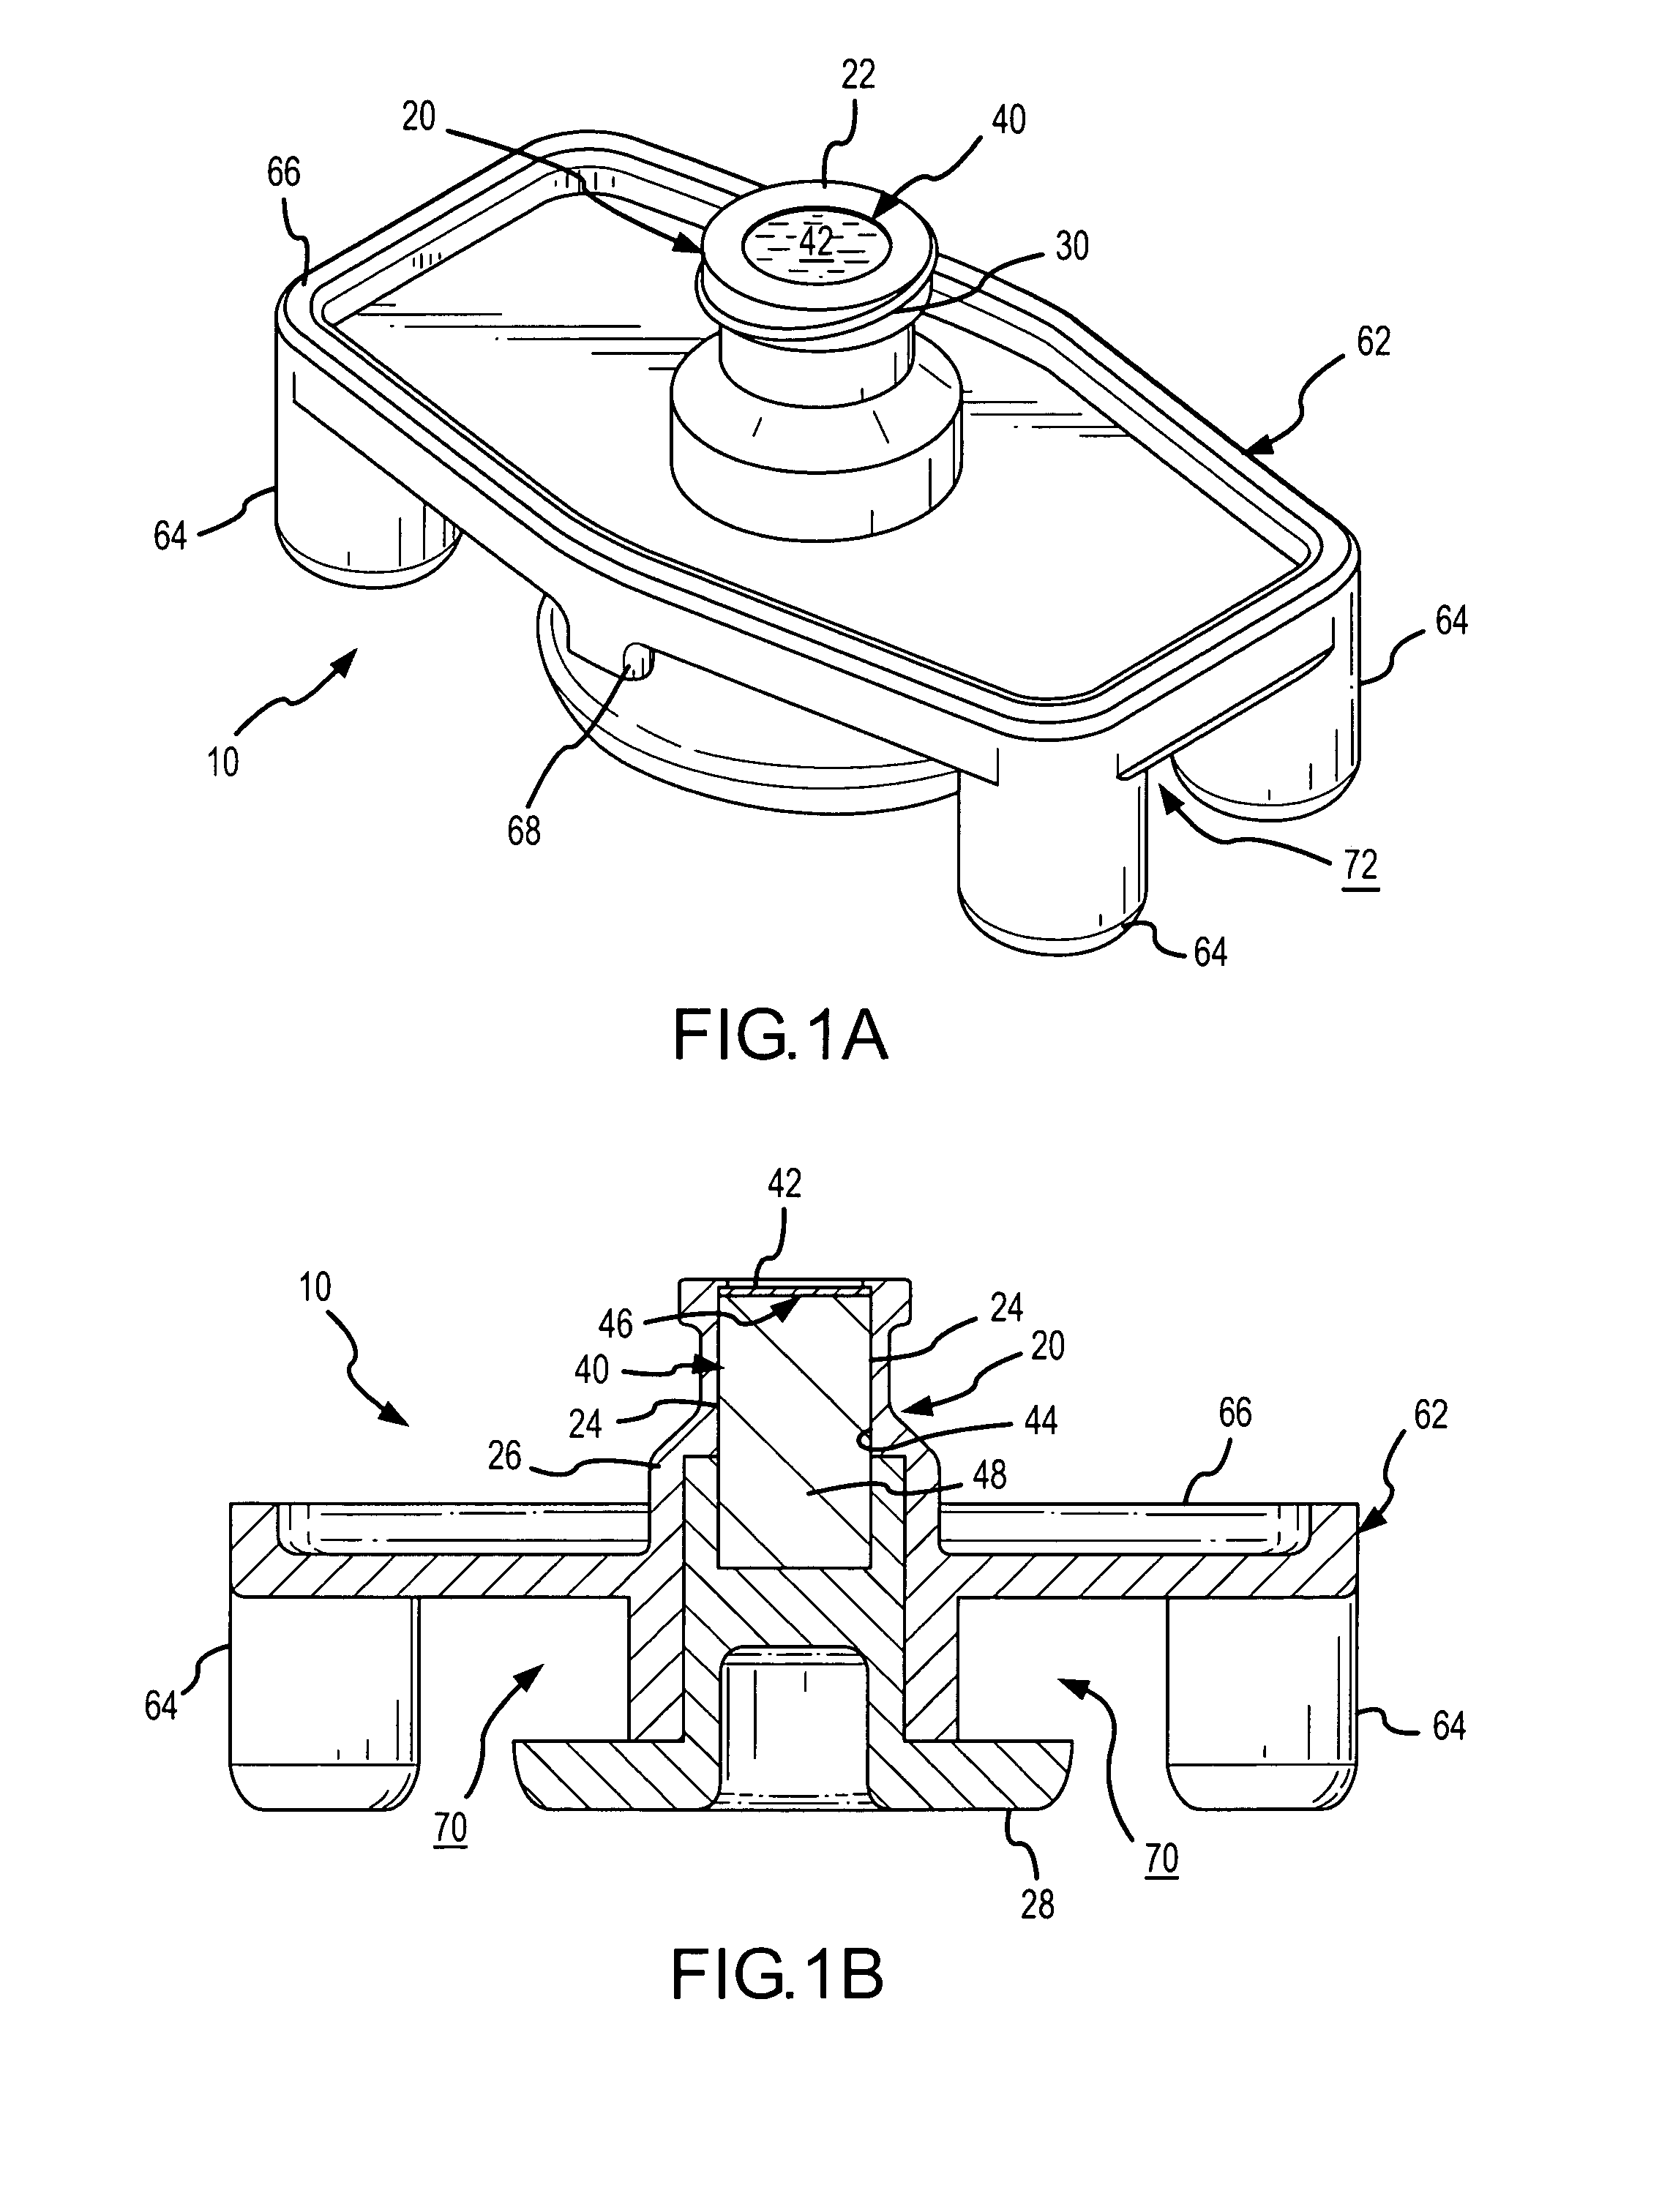 Sterile docking apparatus and method